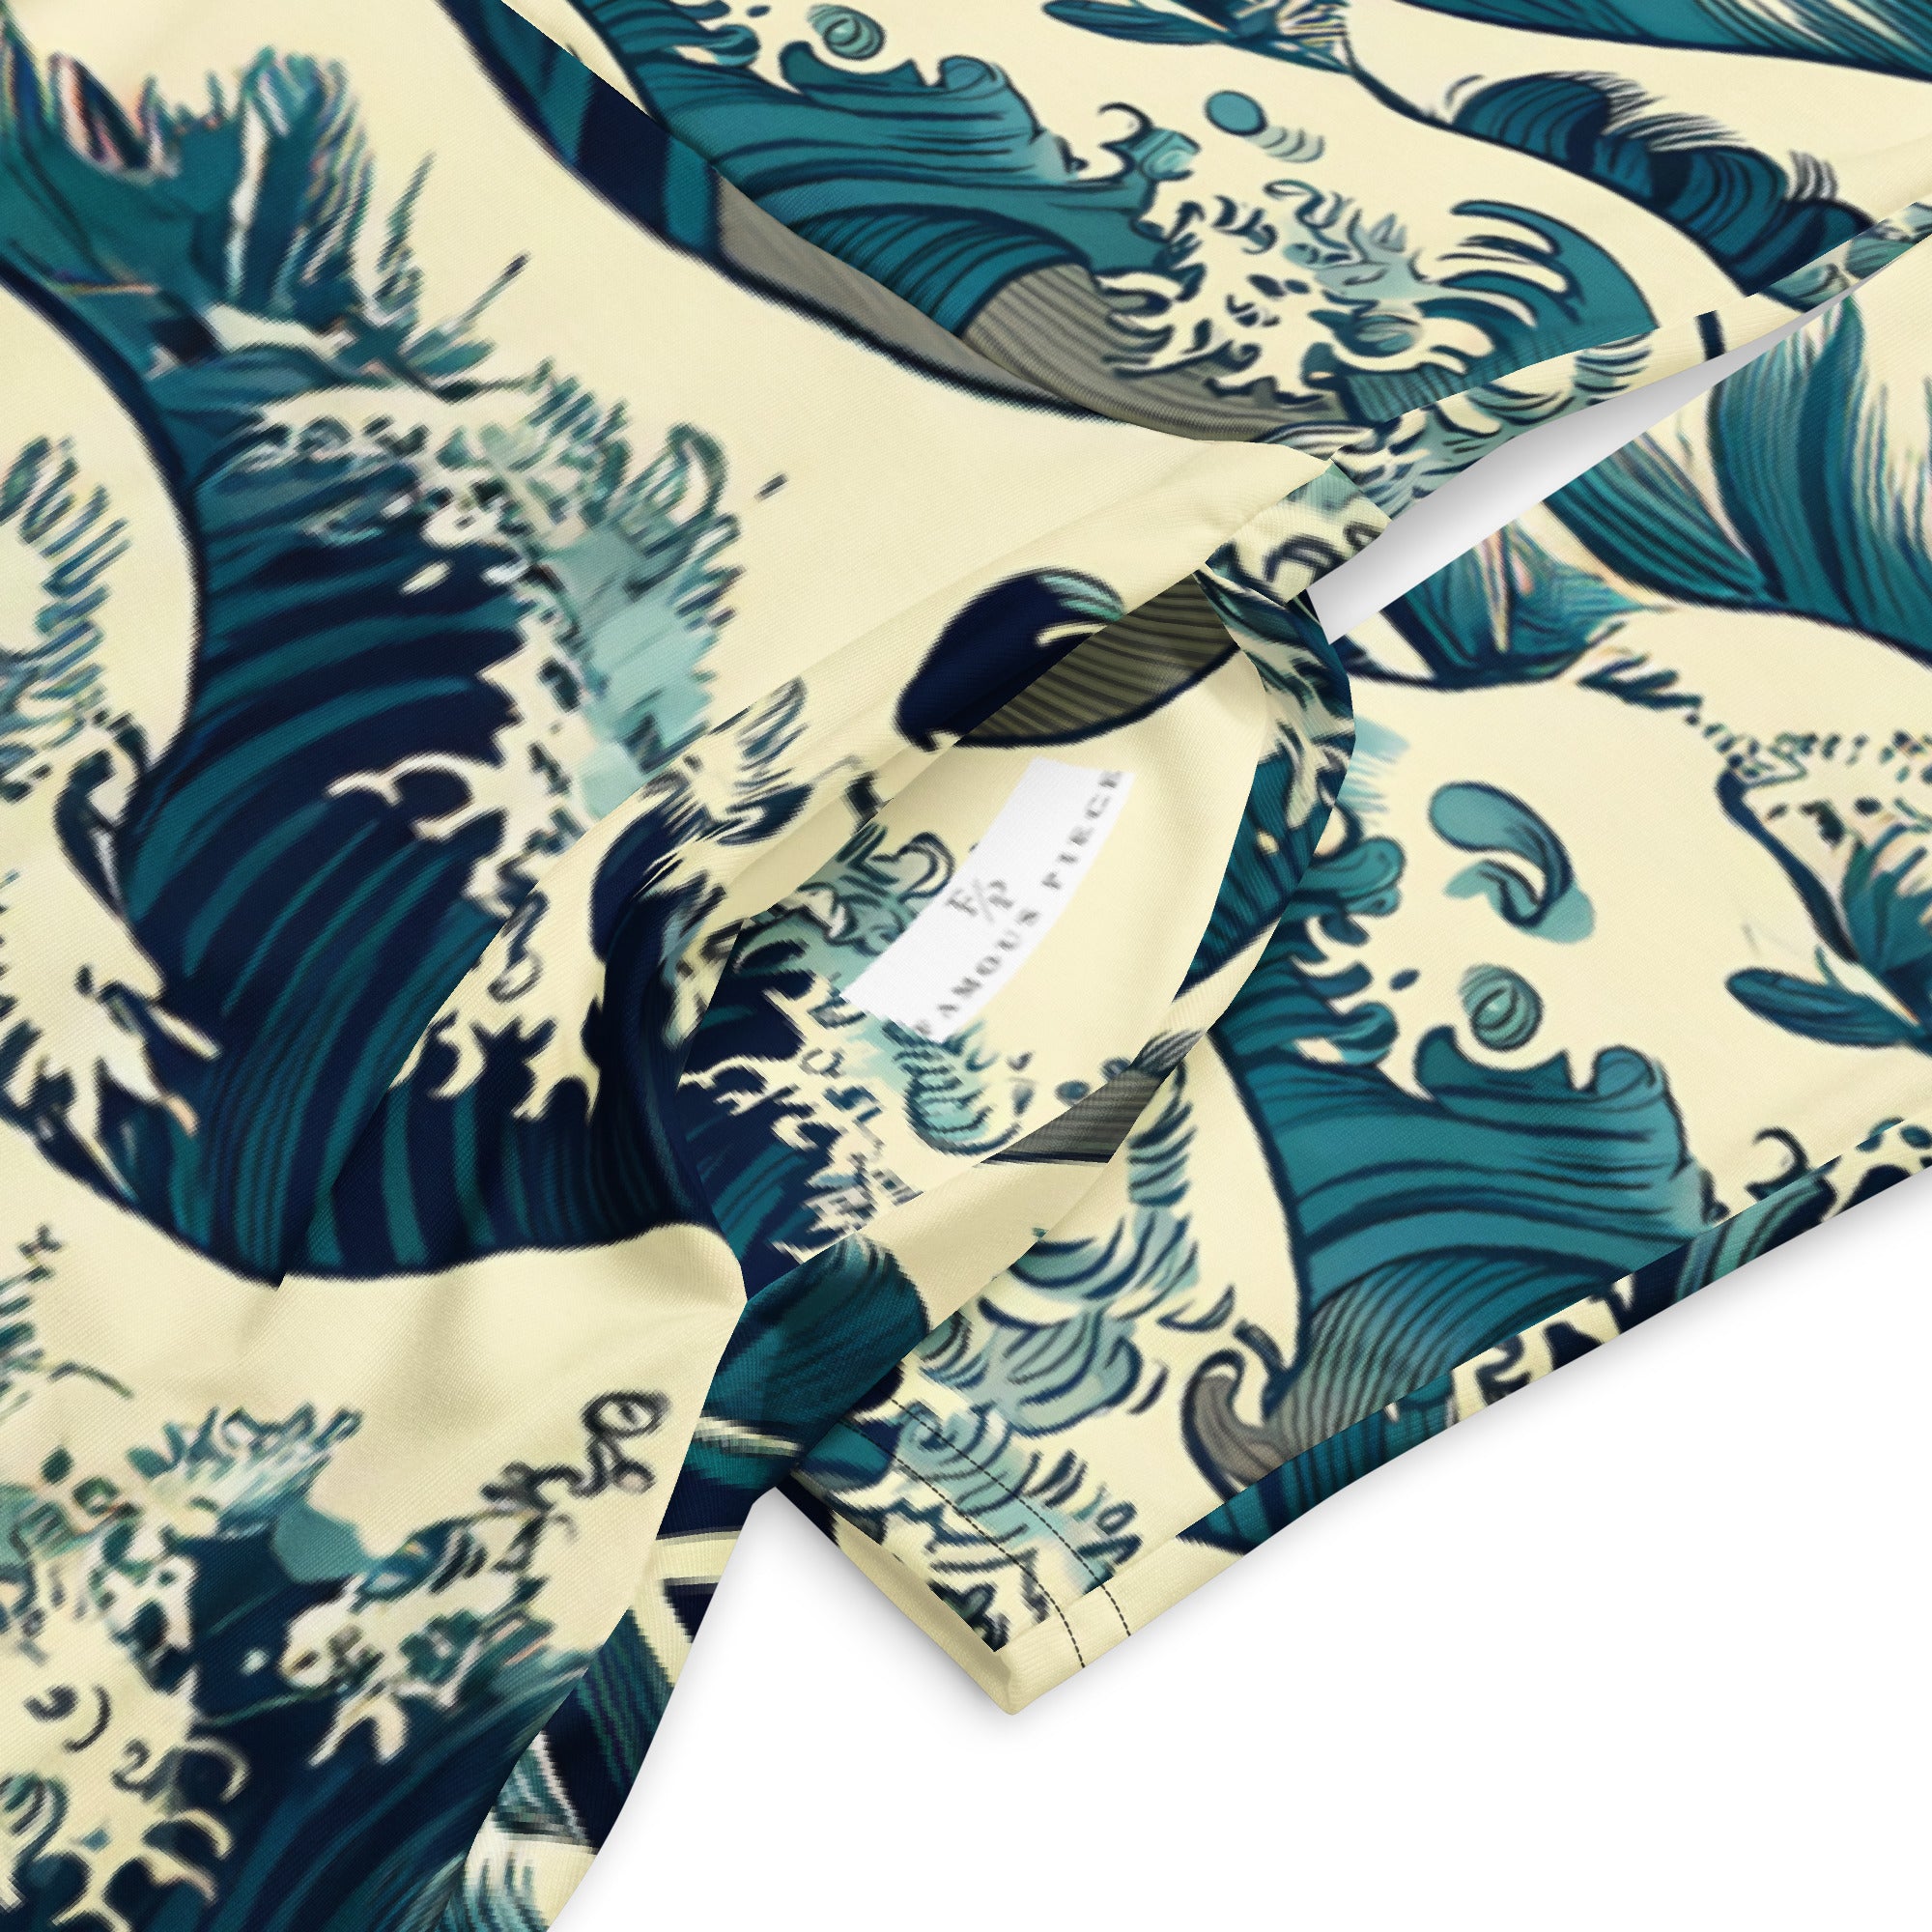 Hokusai 'The Great Wave off Kanagawa' Famous Painting Long Sleeve Midi Dress | Premium Art Midi Dress